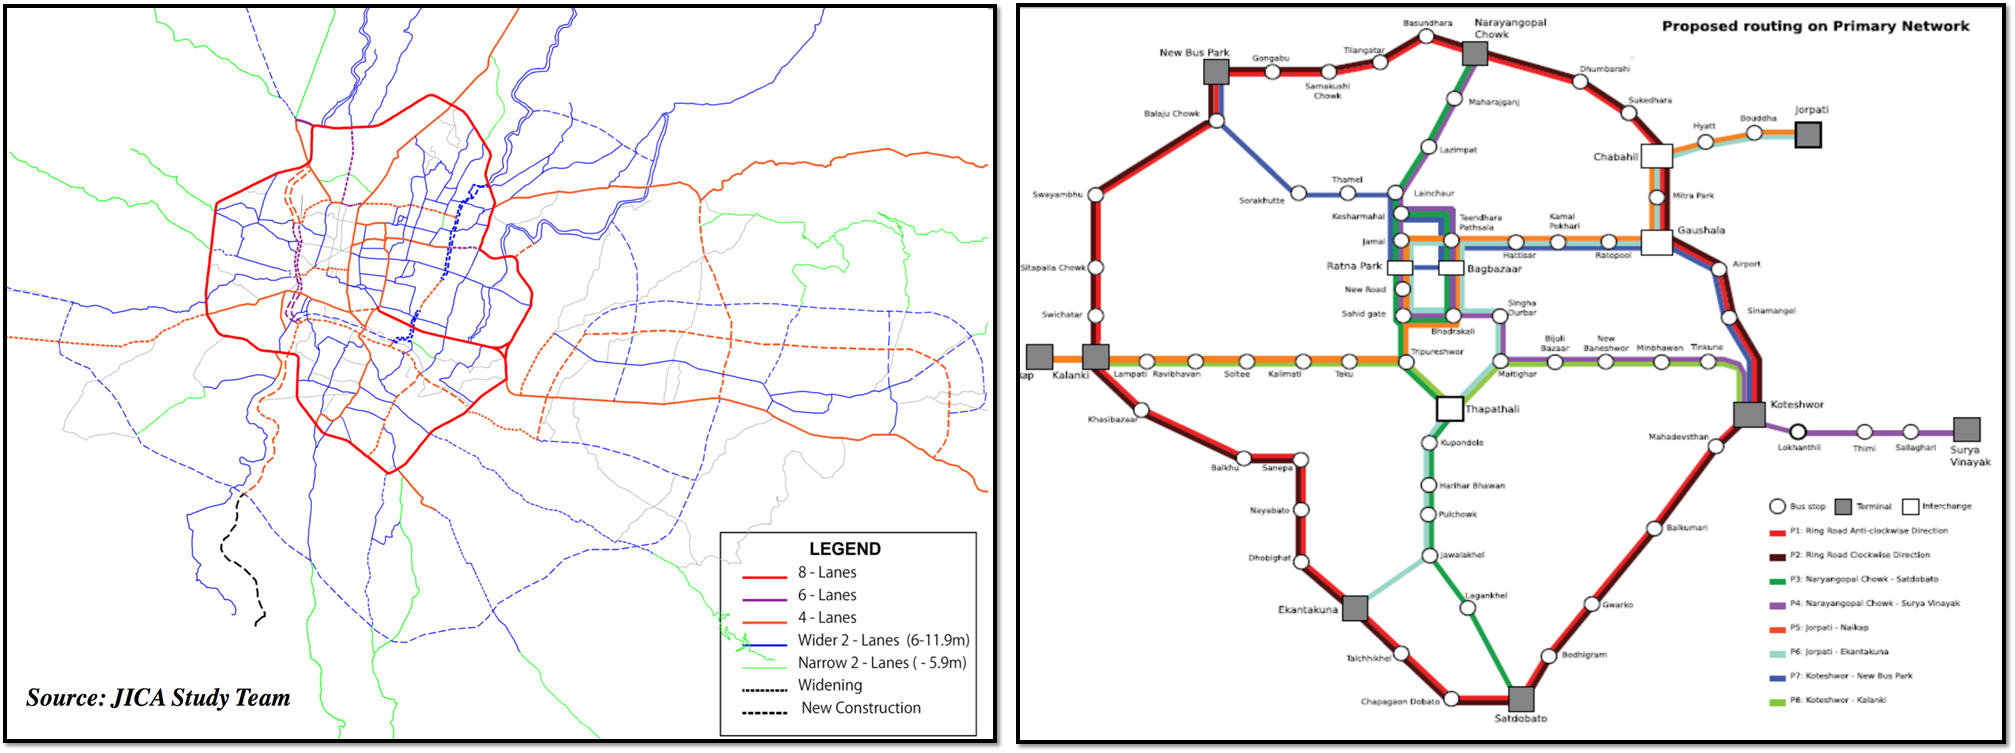 Kathmandu Sustainable Urban Transport Project plans. Left: Road network plans. Right: Public transport network plans. Scale: Outer ring road central E-W diameter approx. 4.5 km. Source: KSUTP, 2016